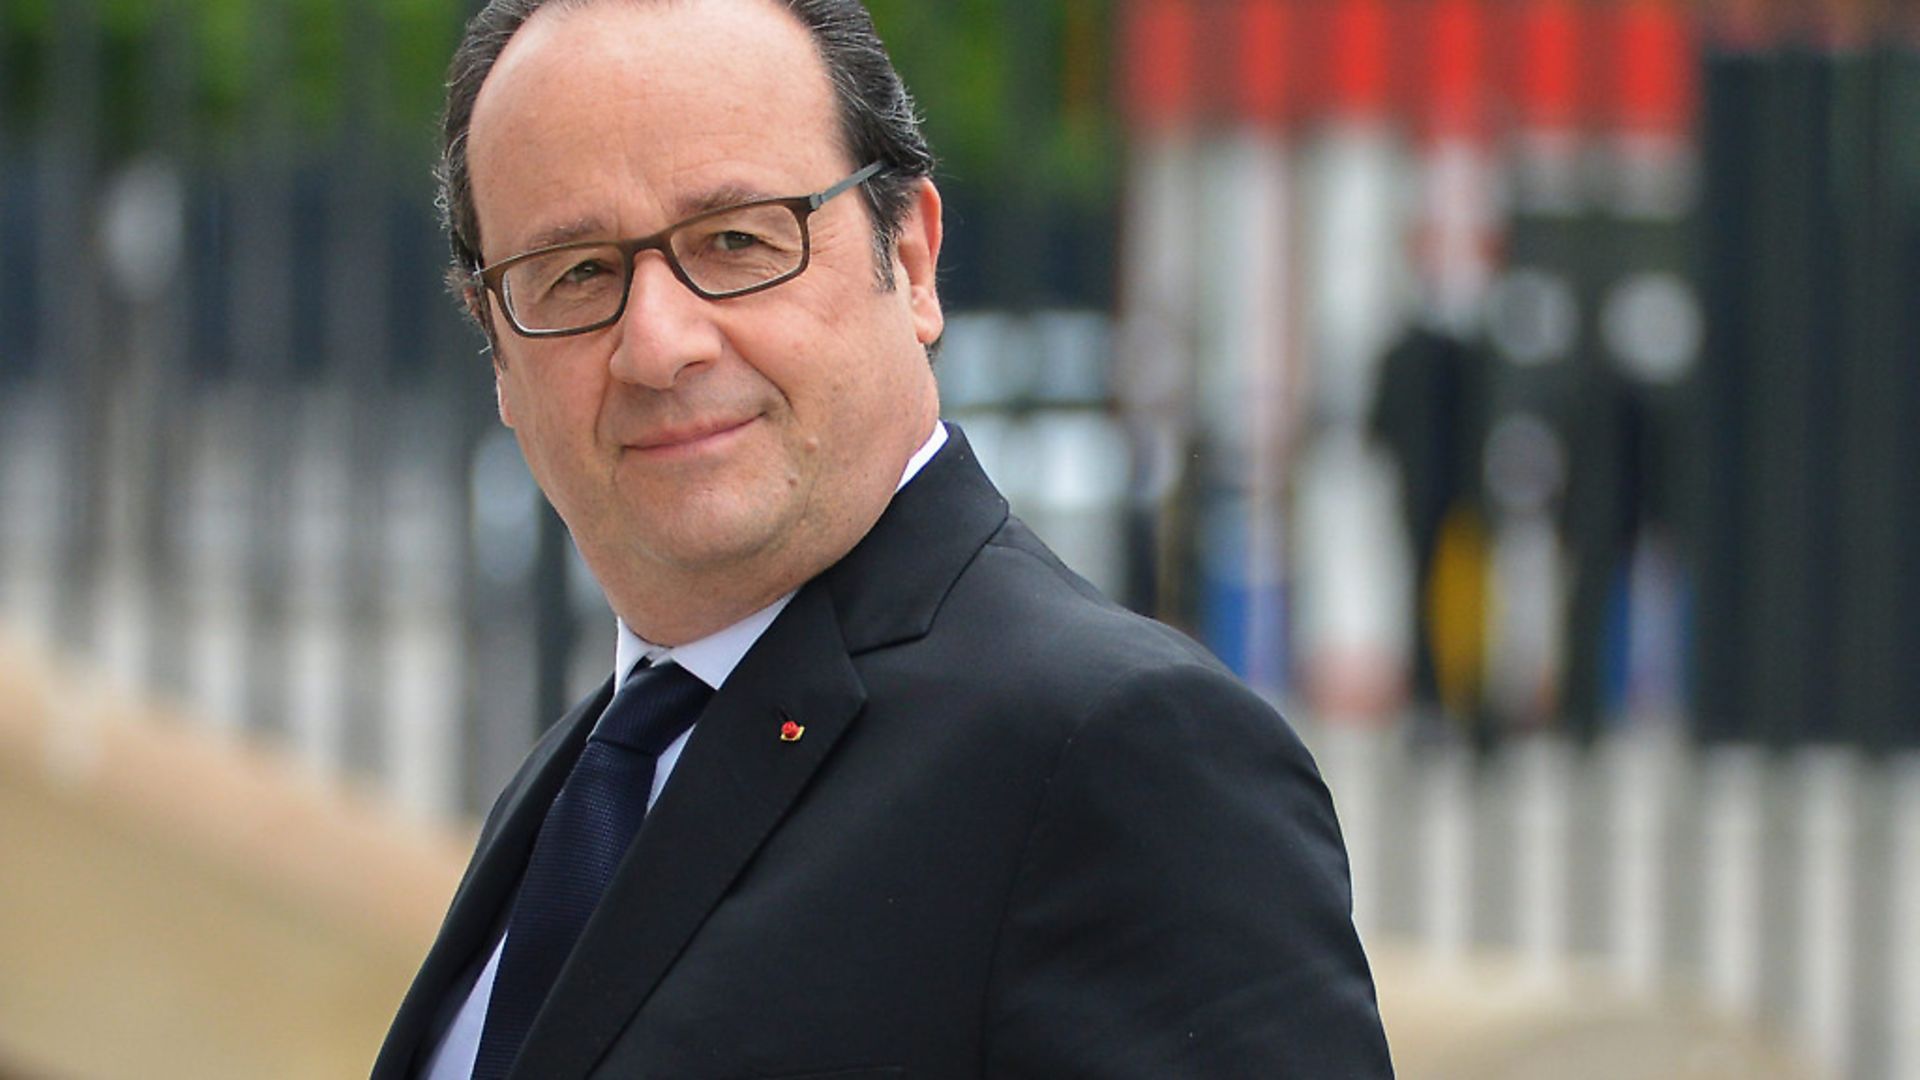 Former French president Francois Hollande (question three) (Alexey Vitvitsky/Sputnik) - Credit: Credit: Sputnik/ TopFoto